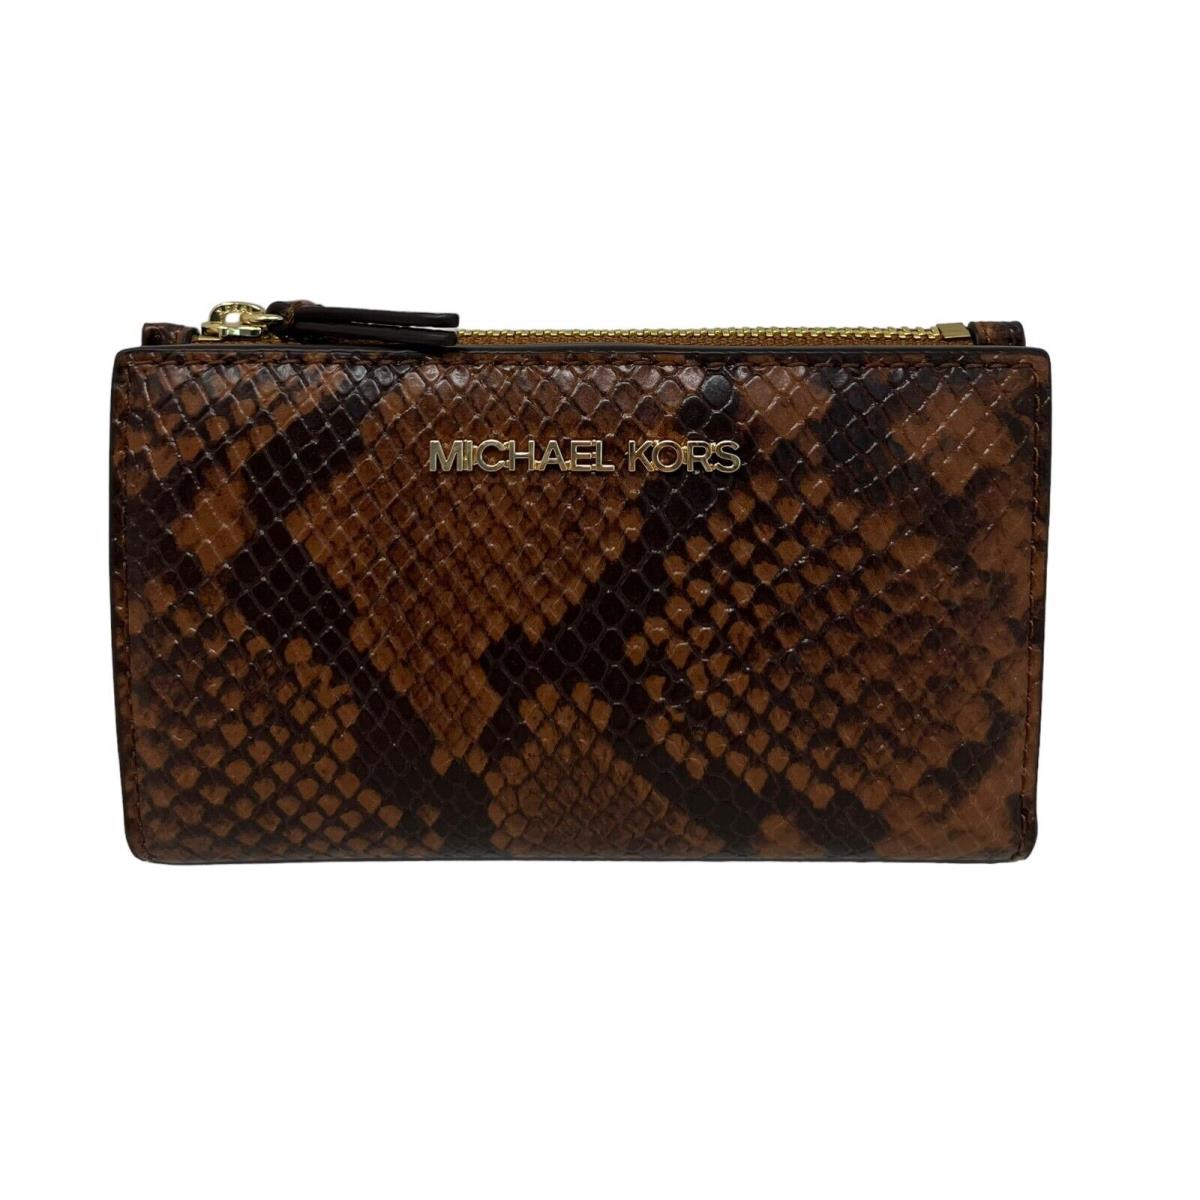 Michael Kors Jet Set Travel Small Zip Card Case Wallet Signature MK Luggage/Snake Embossed